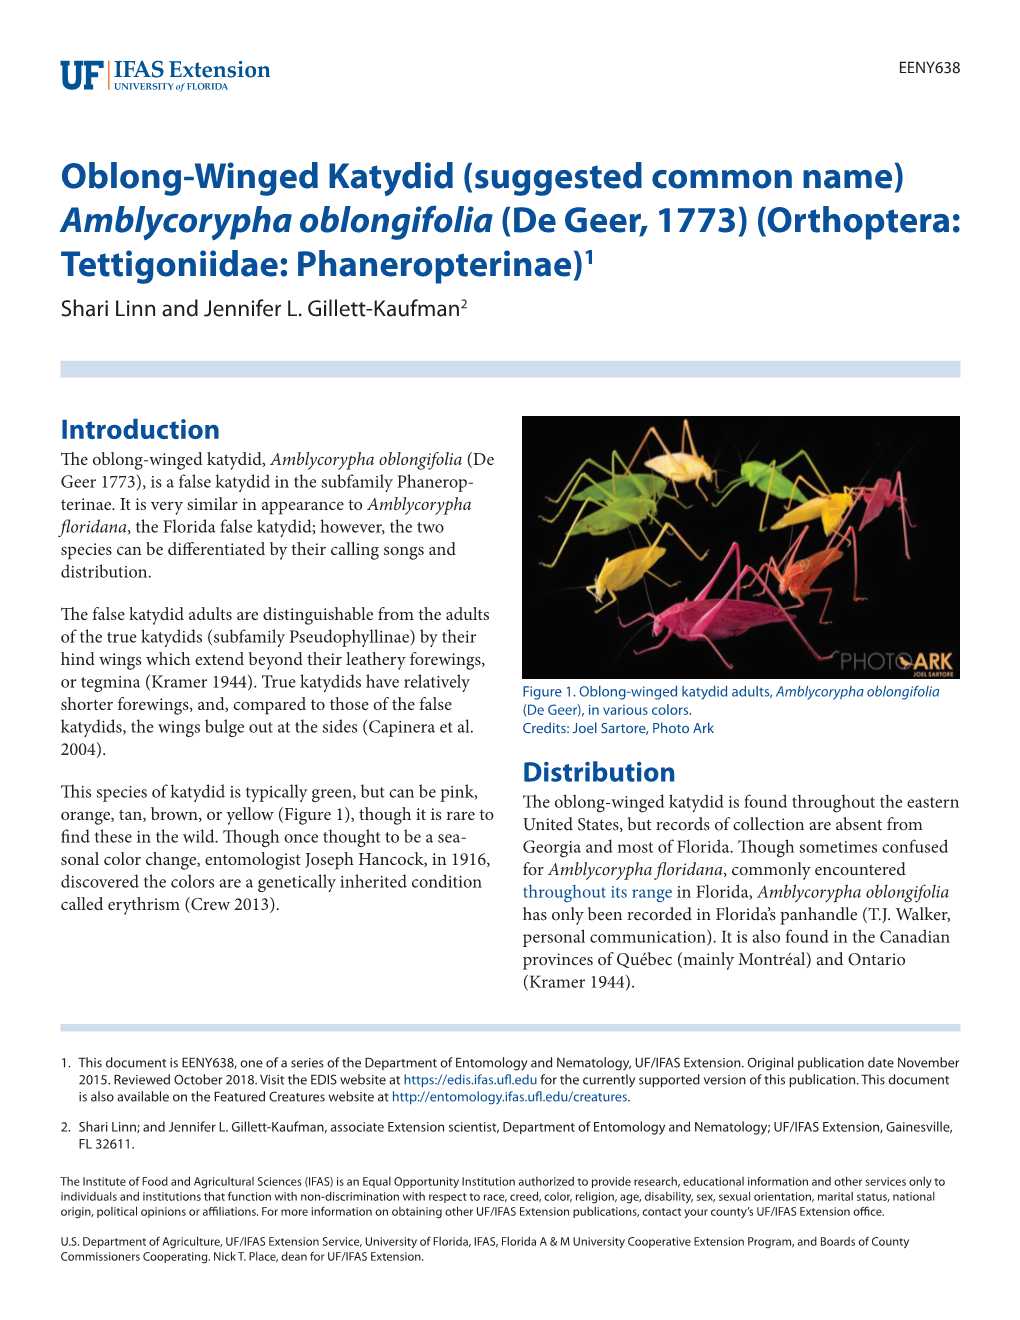 Oblong-Winged Katydid (Suggested Common Name) Amblycorypha Oblongifolia (De Geer, 1773) (Orthoptera: Tettigoniidae: Phaneropterinae)1 Shari Linn and Jennifer L